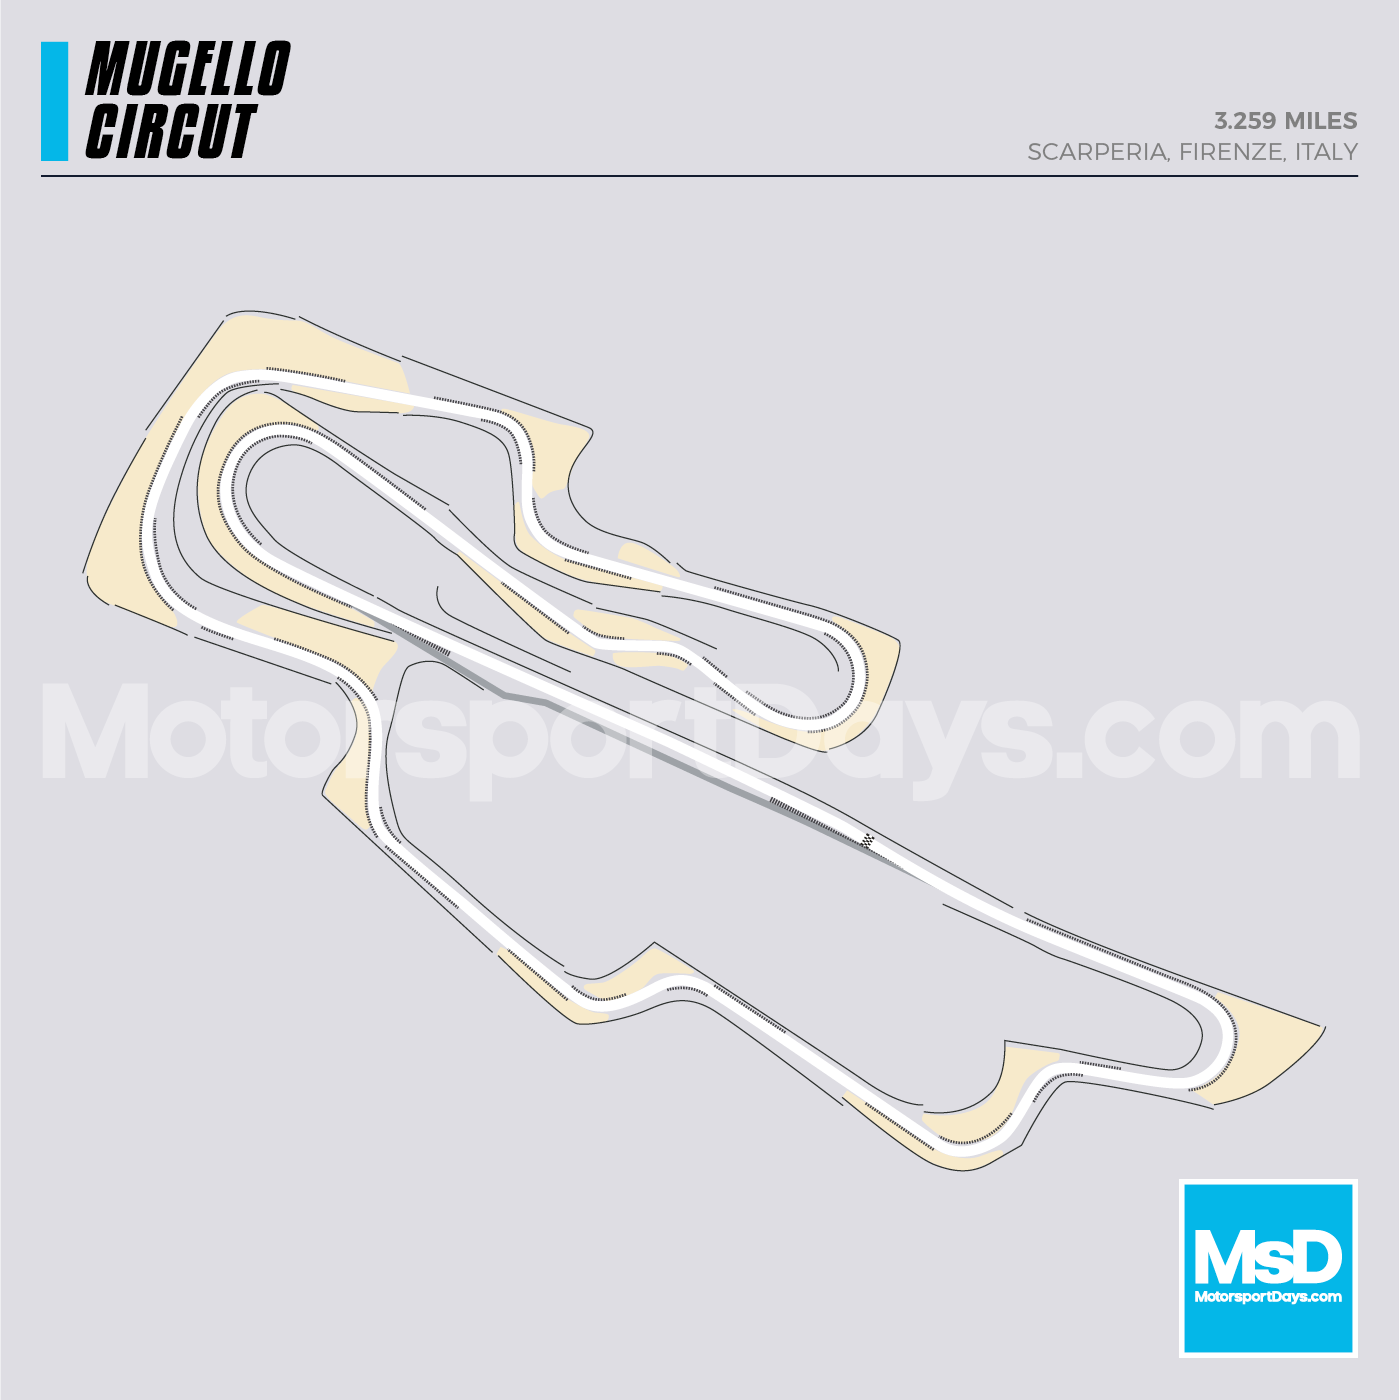 Mugello-Circuit-track-map